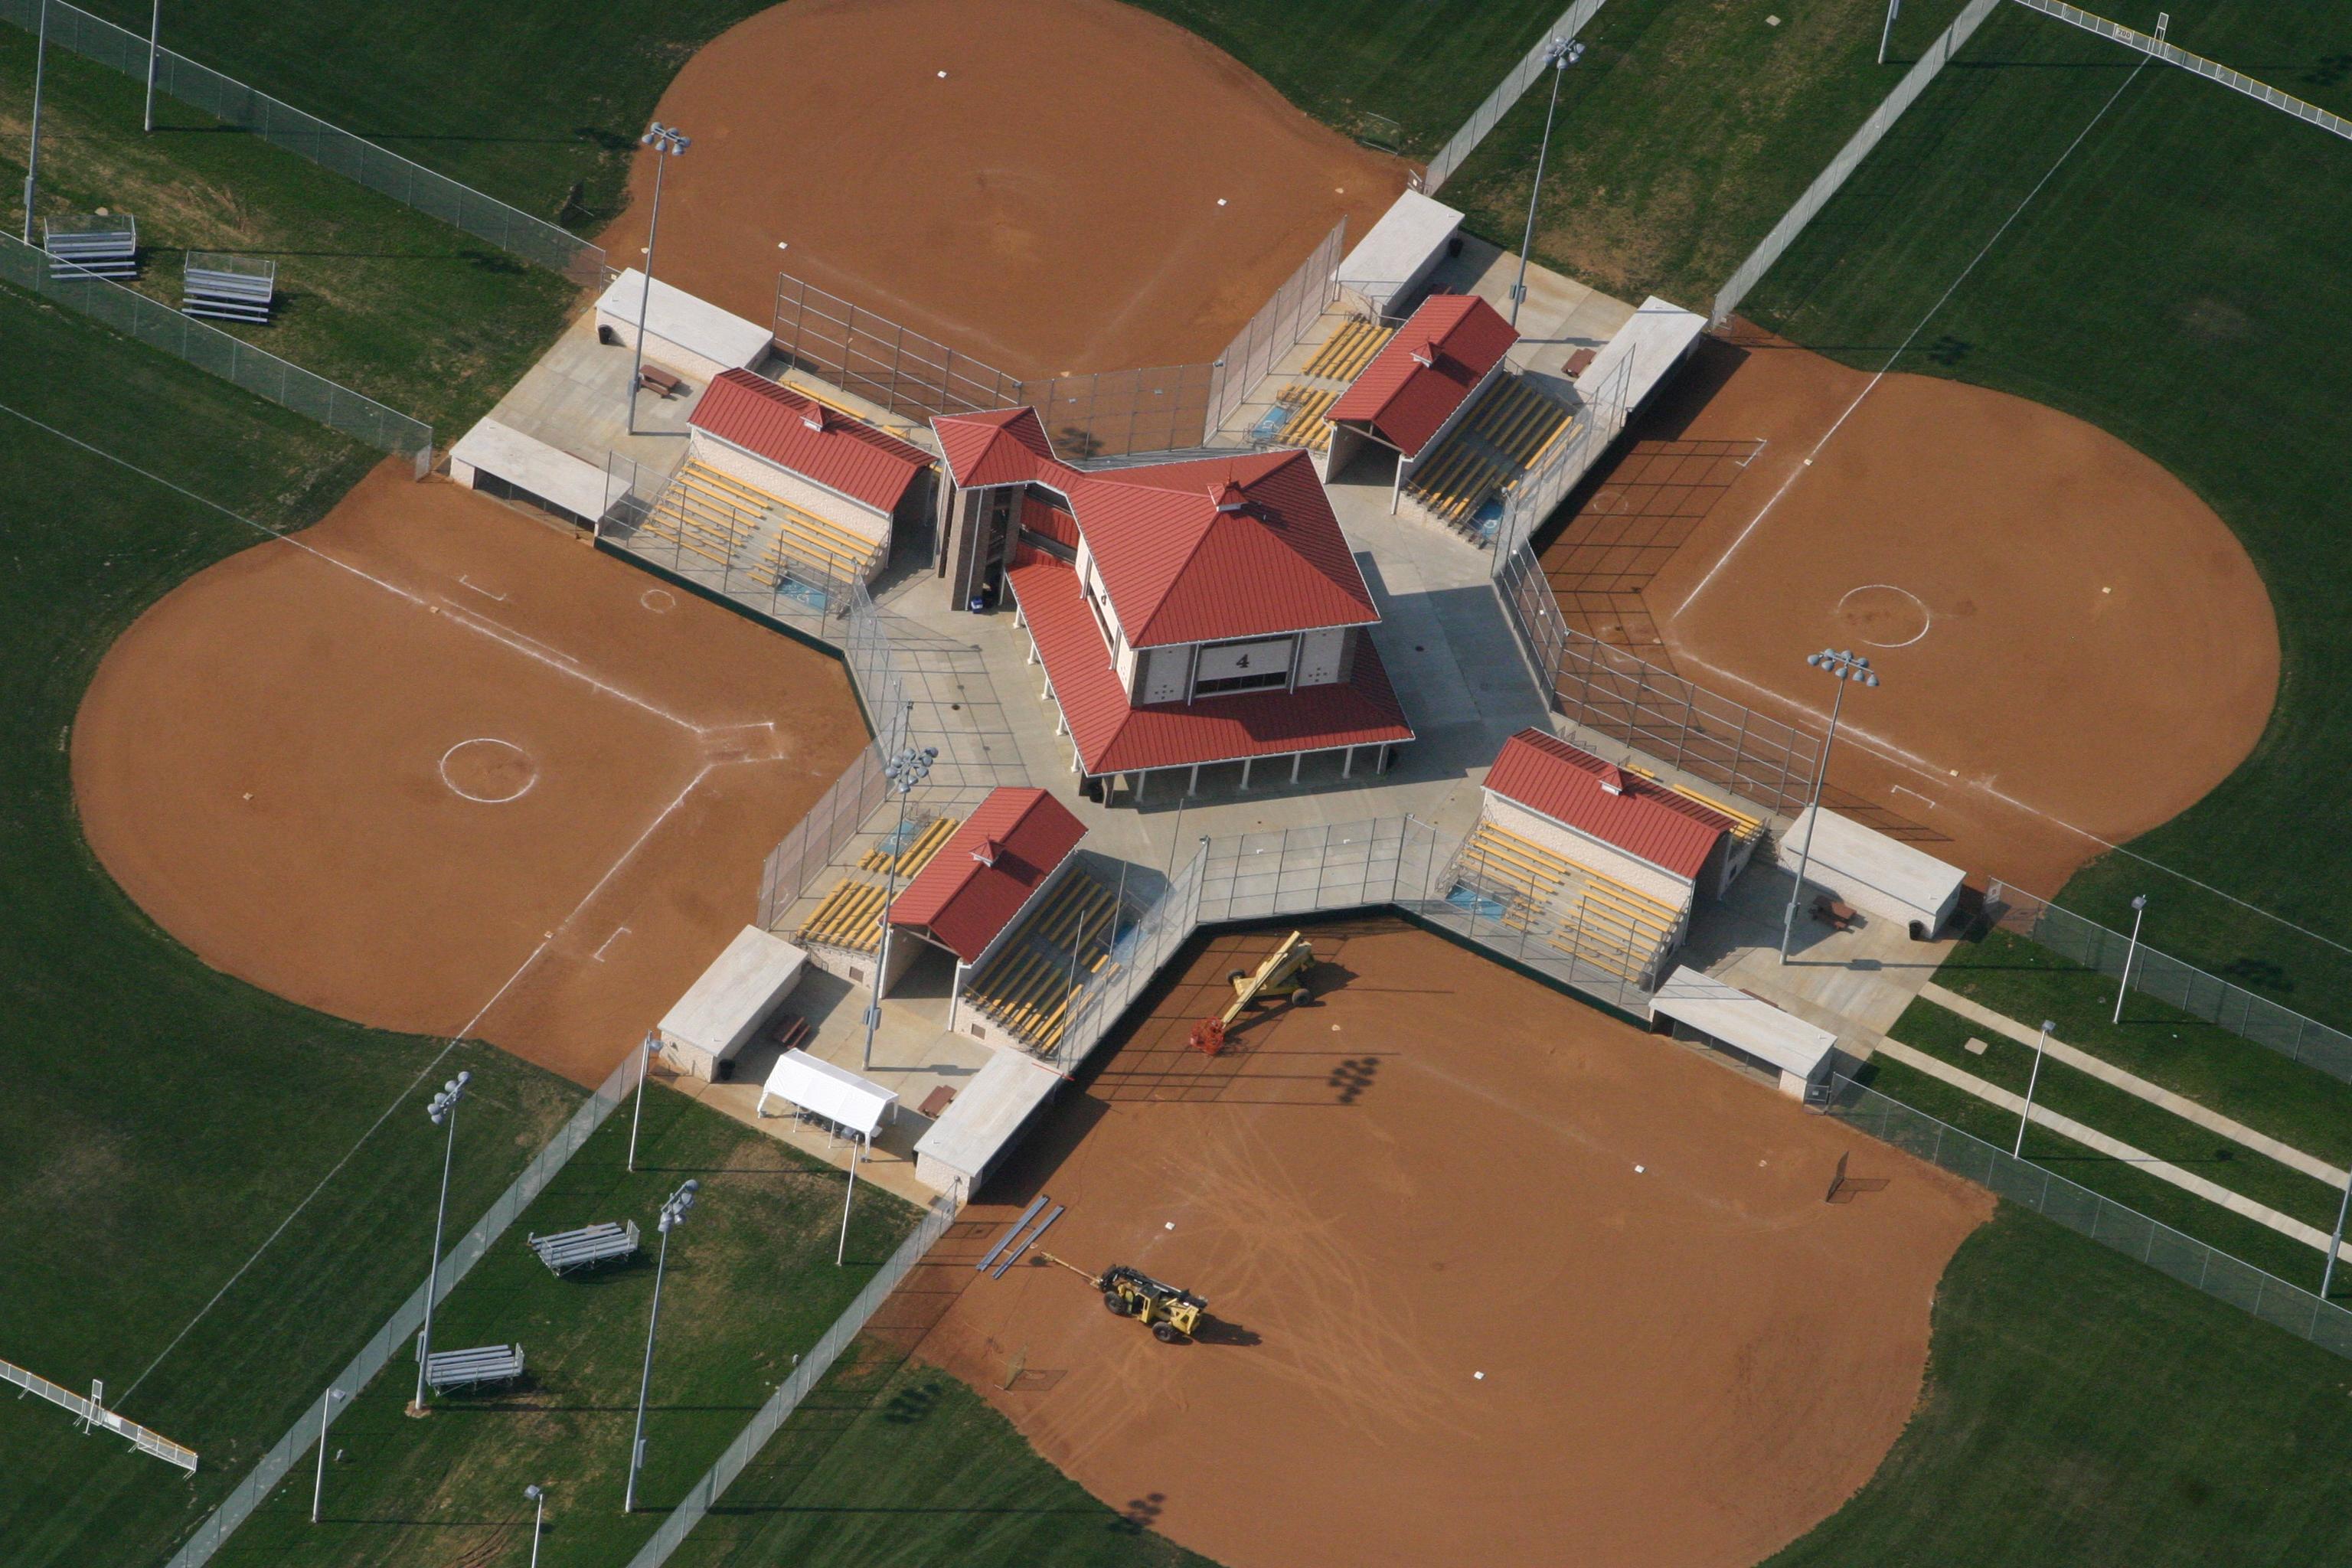 The Field Sports Complex